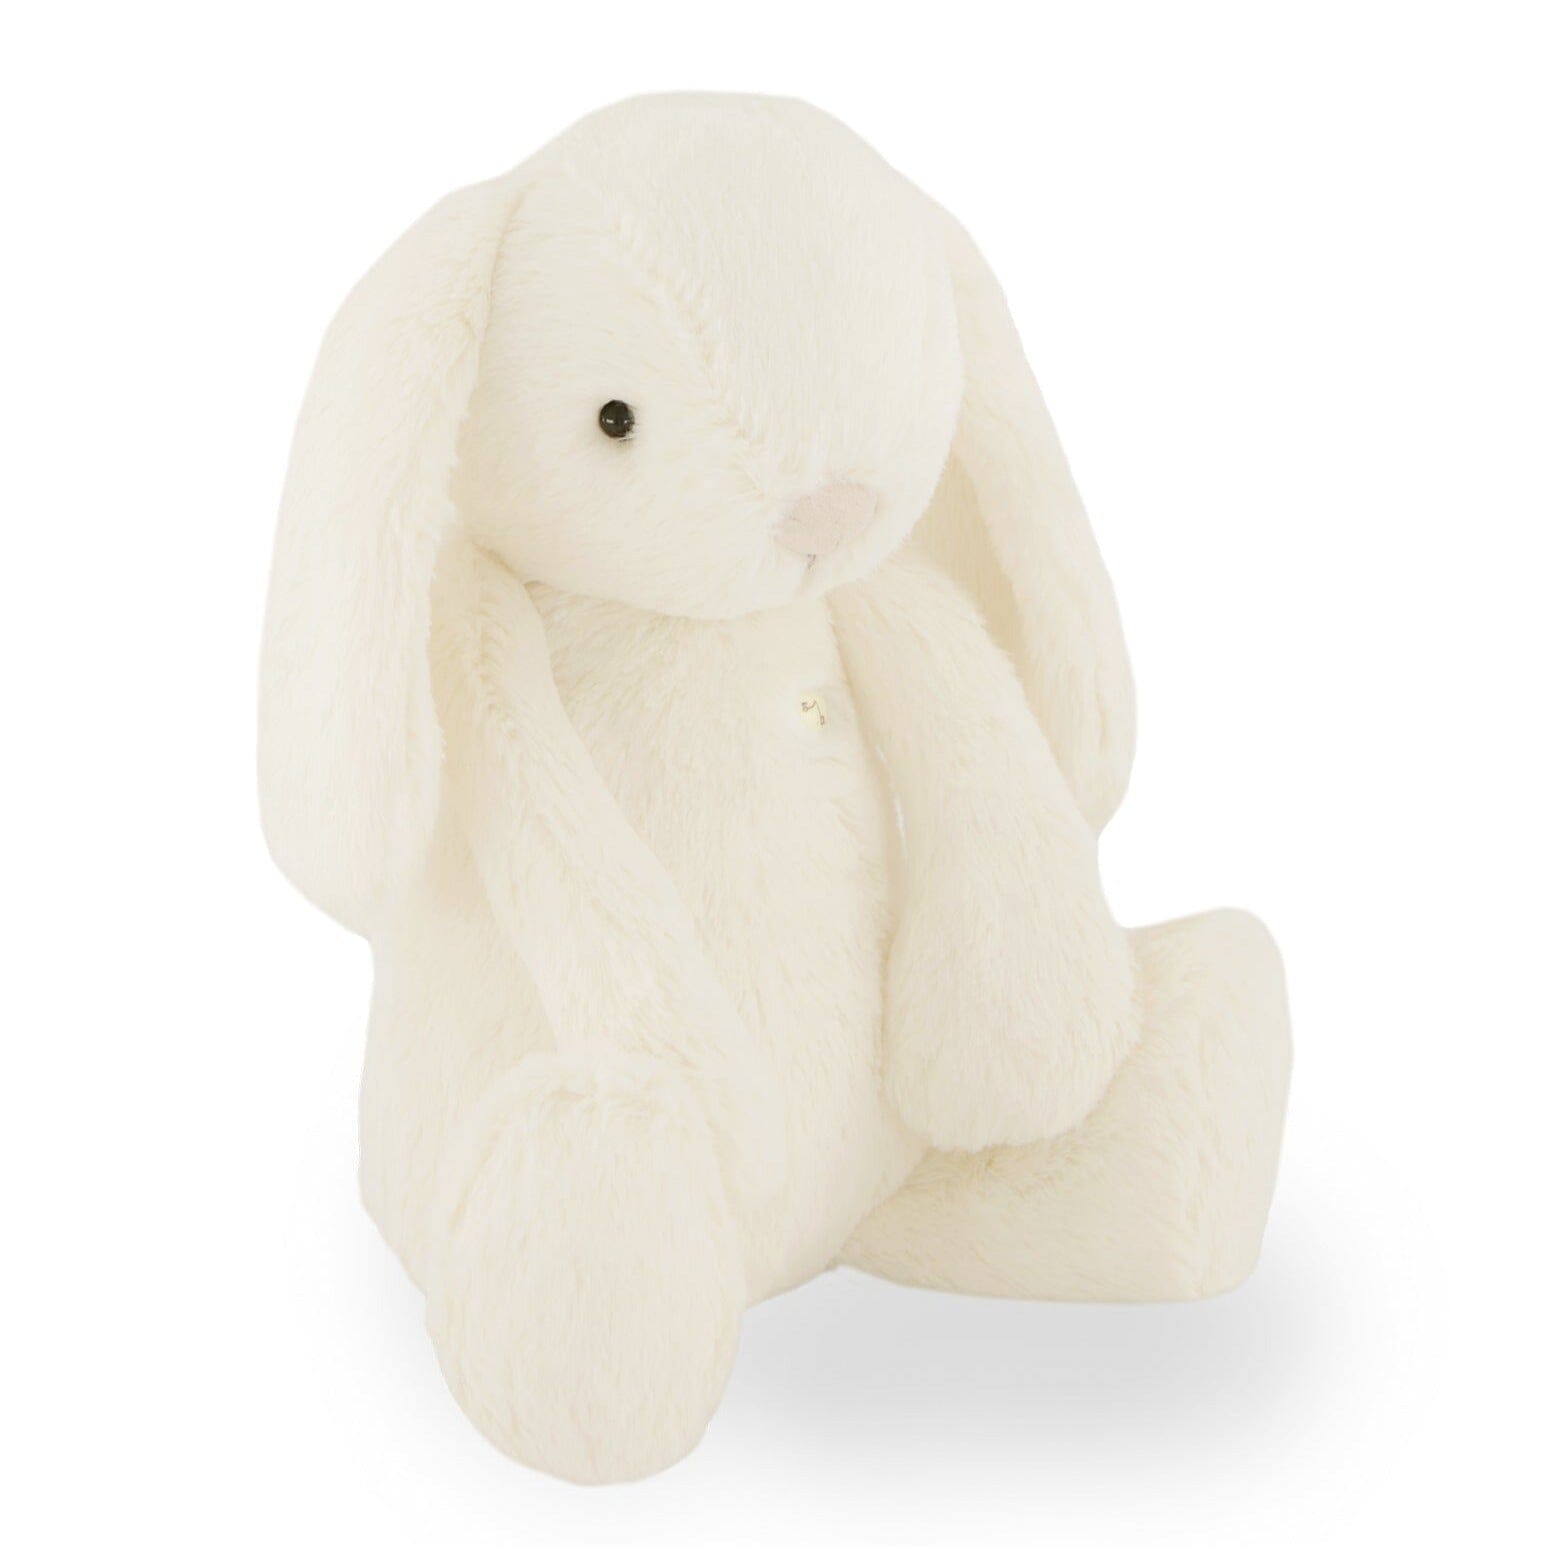 Penelope The Bunny - Snuggle Bunnies - Marshmallow